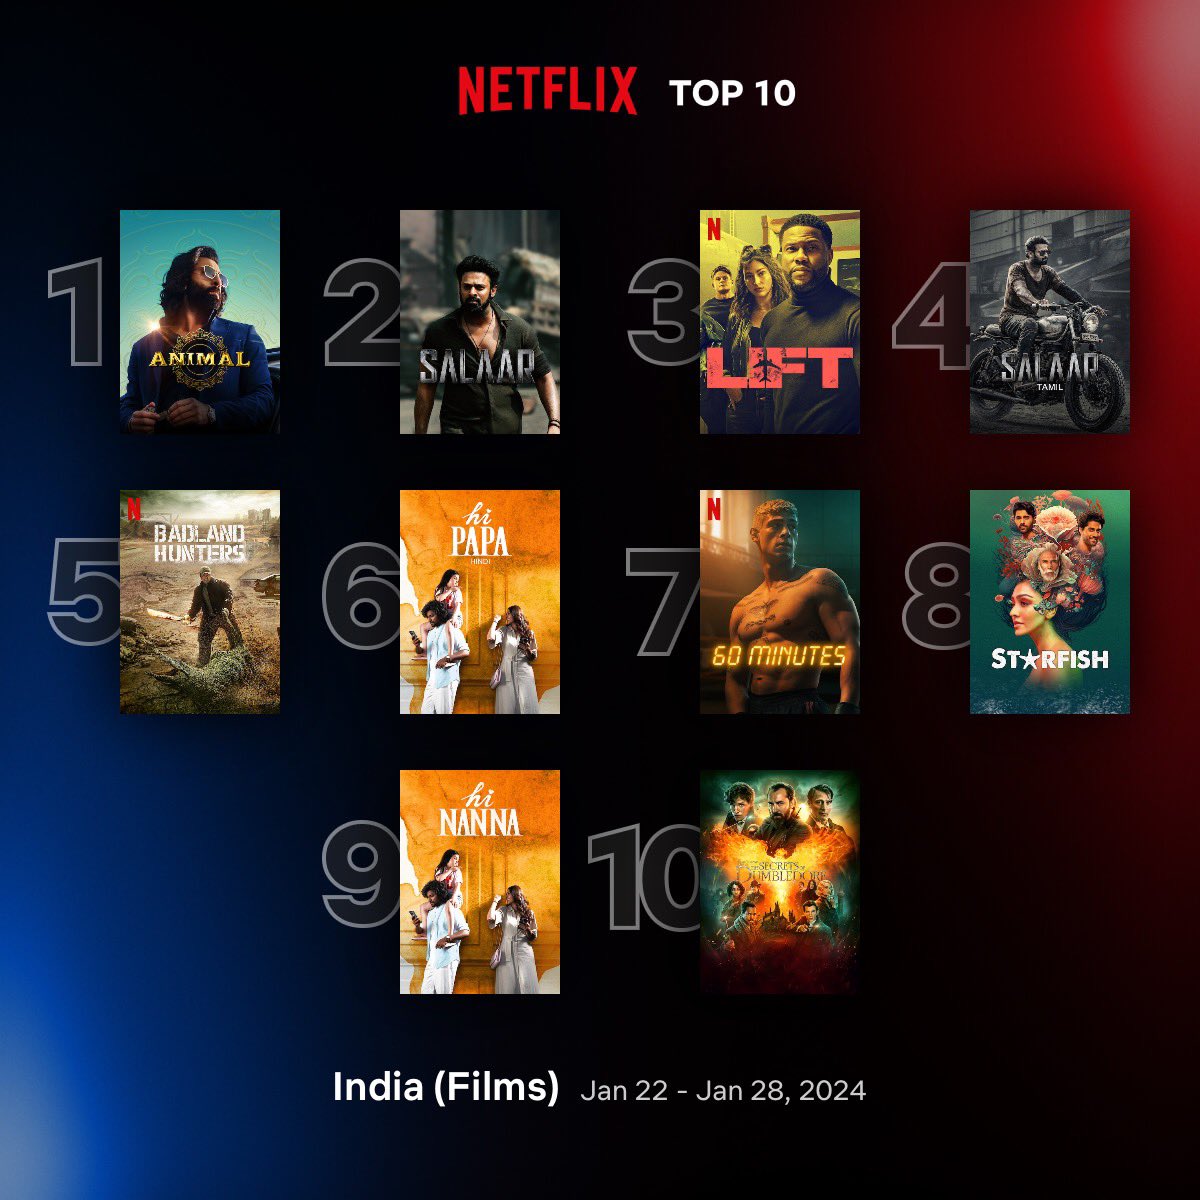 Top 10 Films on #NetflixIndia between 22 - 28 January 1. #Animal 🇮🇳 2. #Salaar 🇮🇳 3. #Lift 🇺🇸 4. #Salaar (Tamil) 🇮🇳 5. #BadlandHunters 🇰🇷 6. #HiPapa / #HiNanna (Hindi) 🇮🇳 7. #SixtyMinutes 🇩🇪 8. #Starfish 🇮🇳 9. #HiNanna 🇮🇳 10. #FantasticBeasts: The Secrets of Dumbledore 🇬🇧🇺🇸